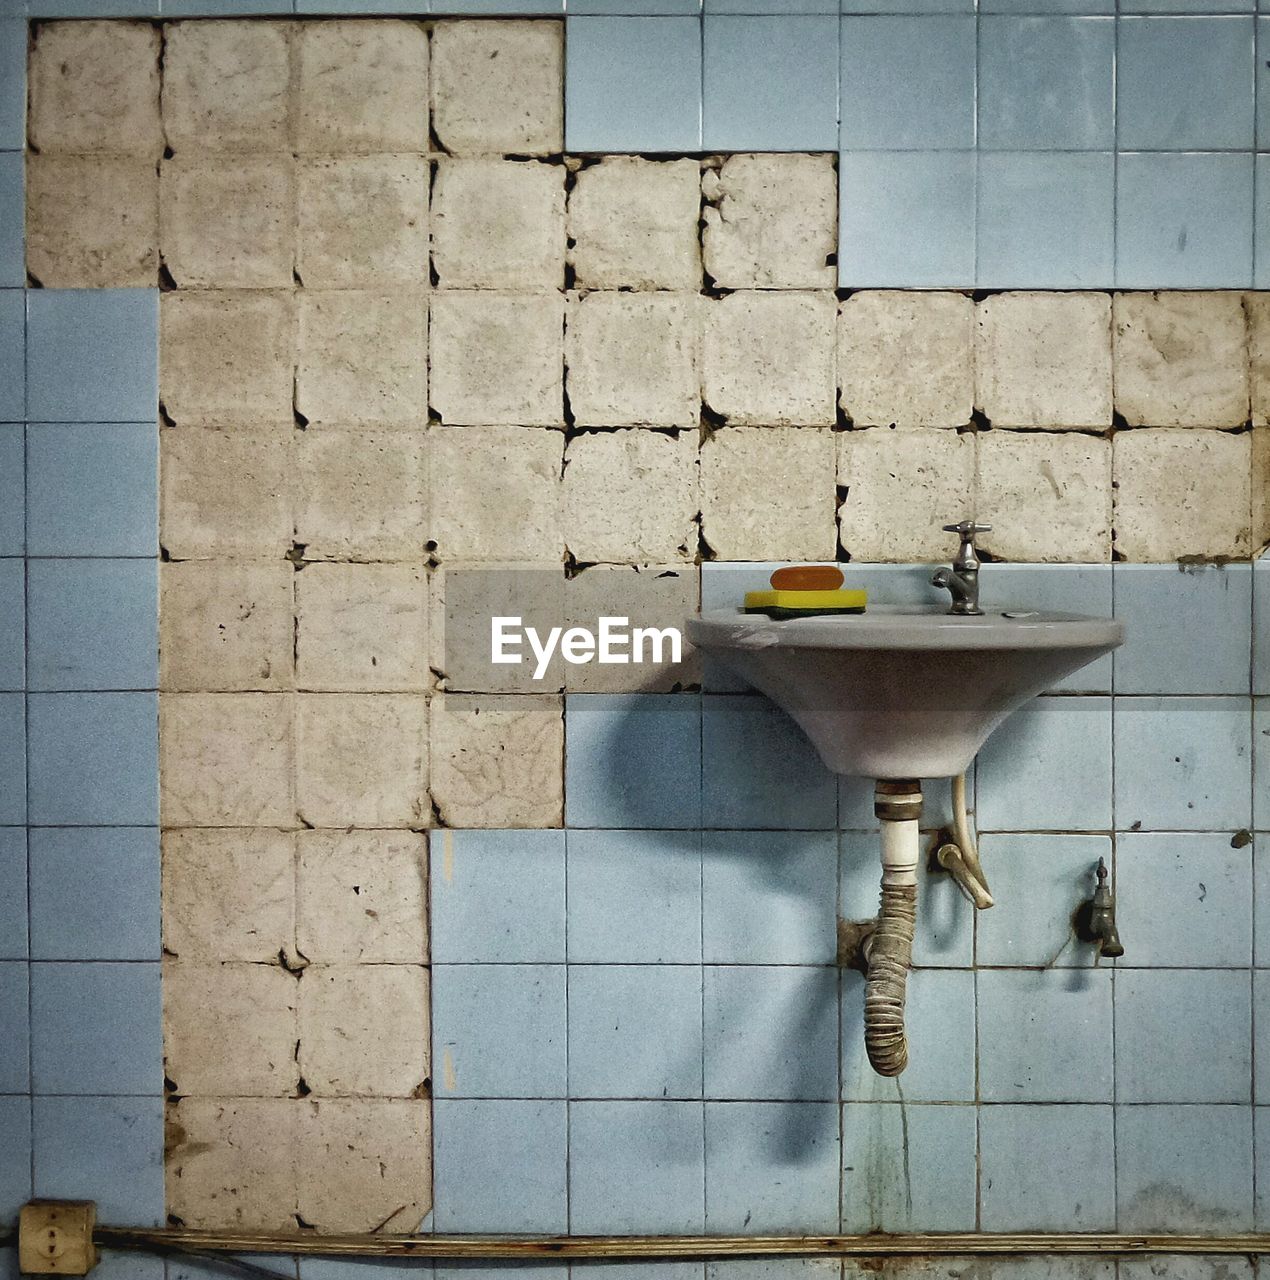 Interior of abandoned bathroom